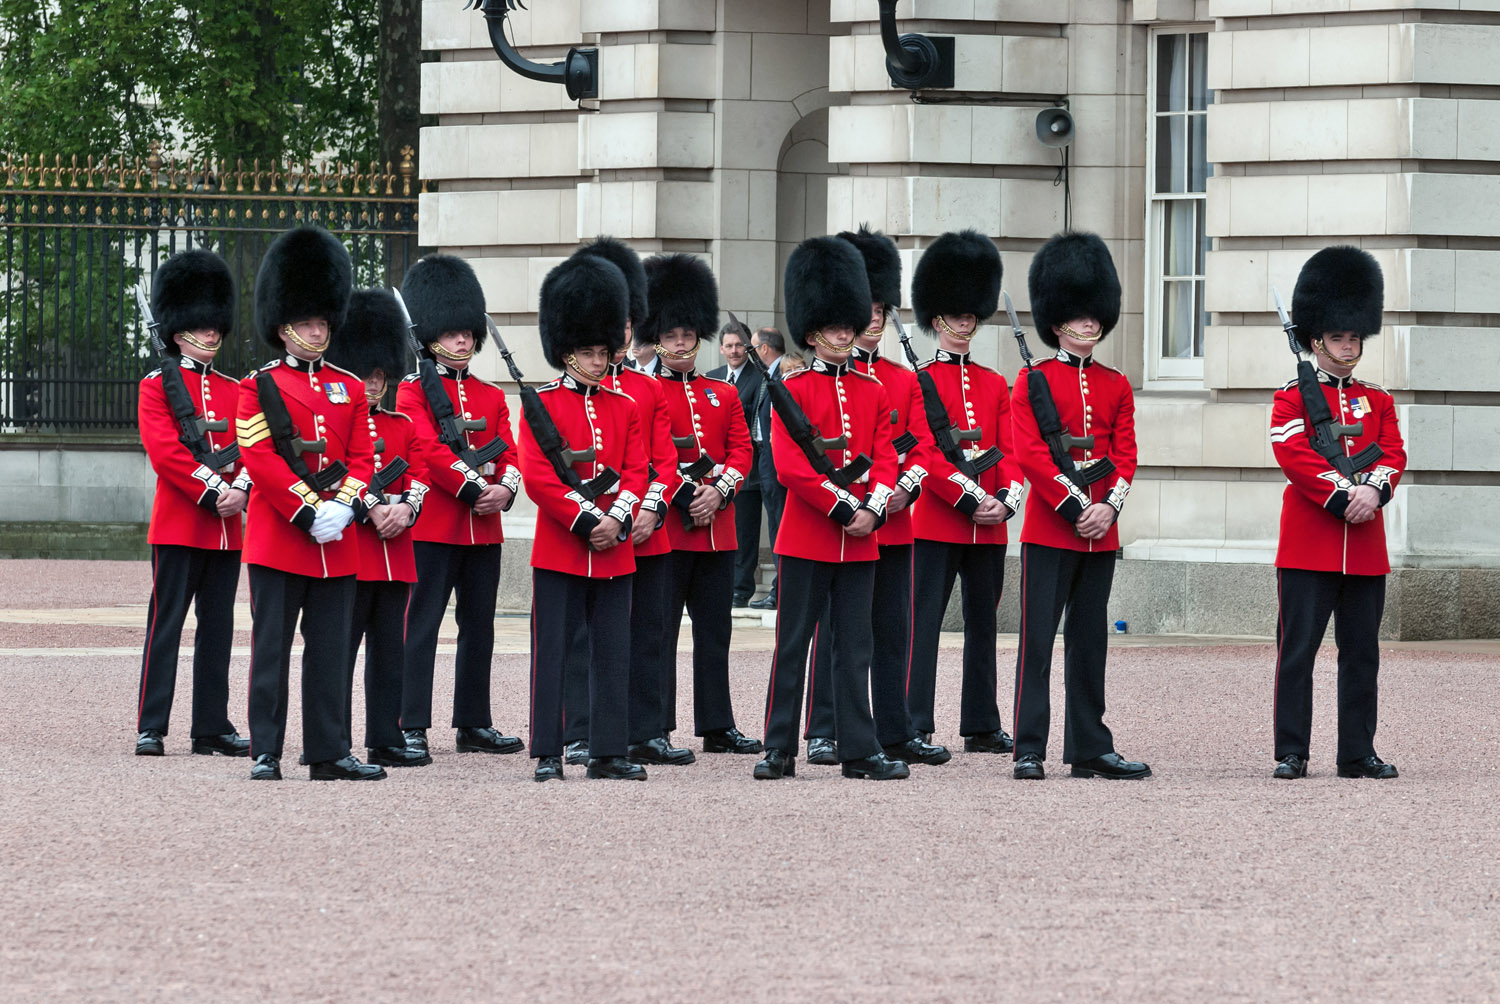 the Royal Guard, Buckingham Palace, London